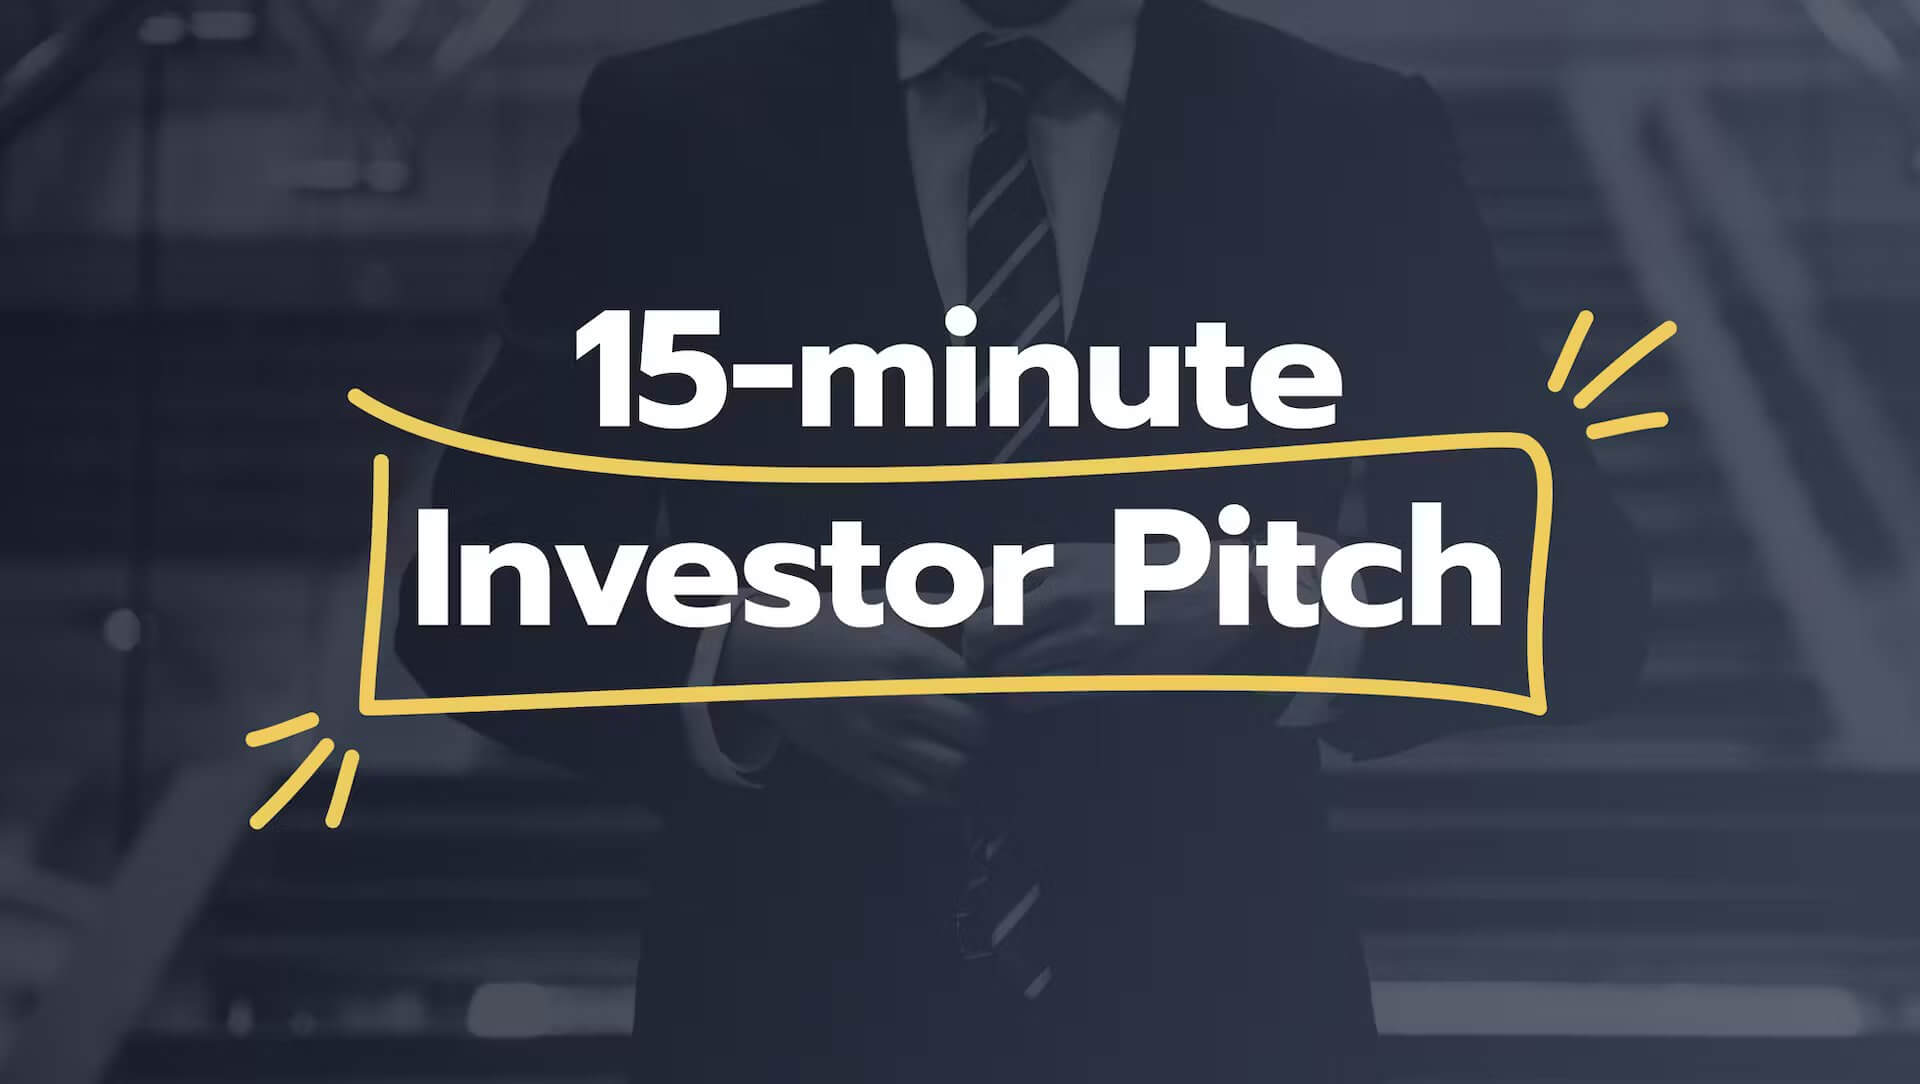 15-minute Investor Pitch